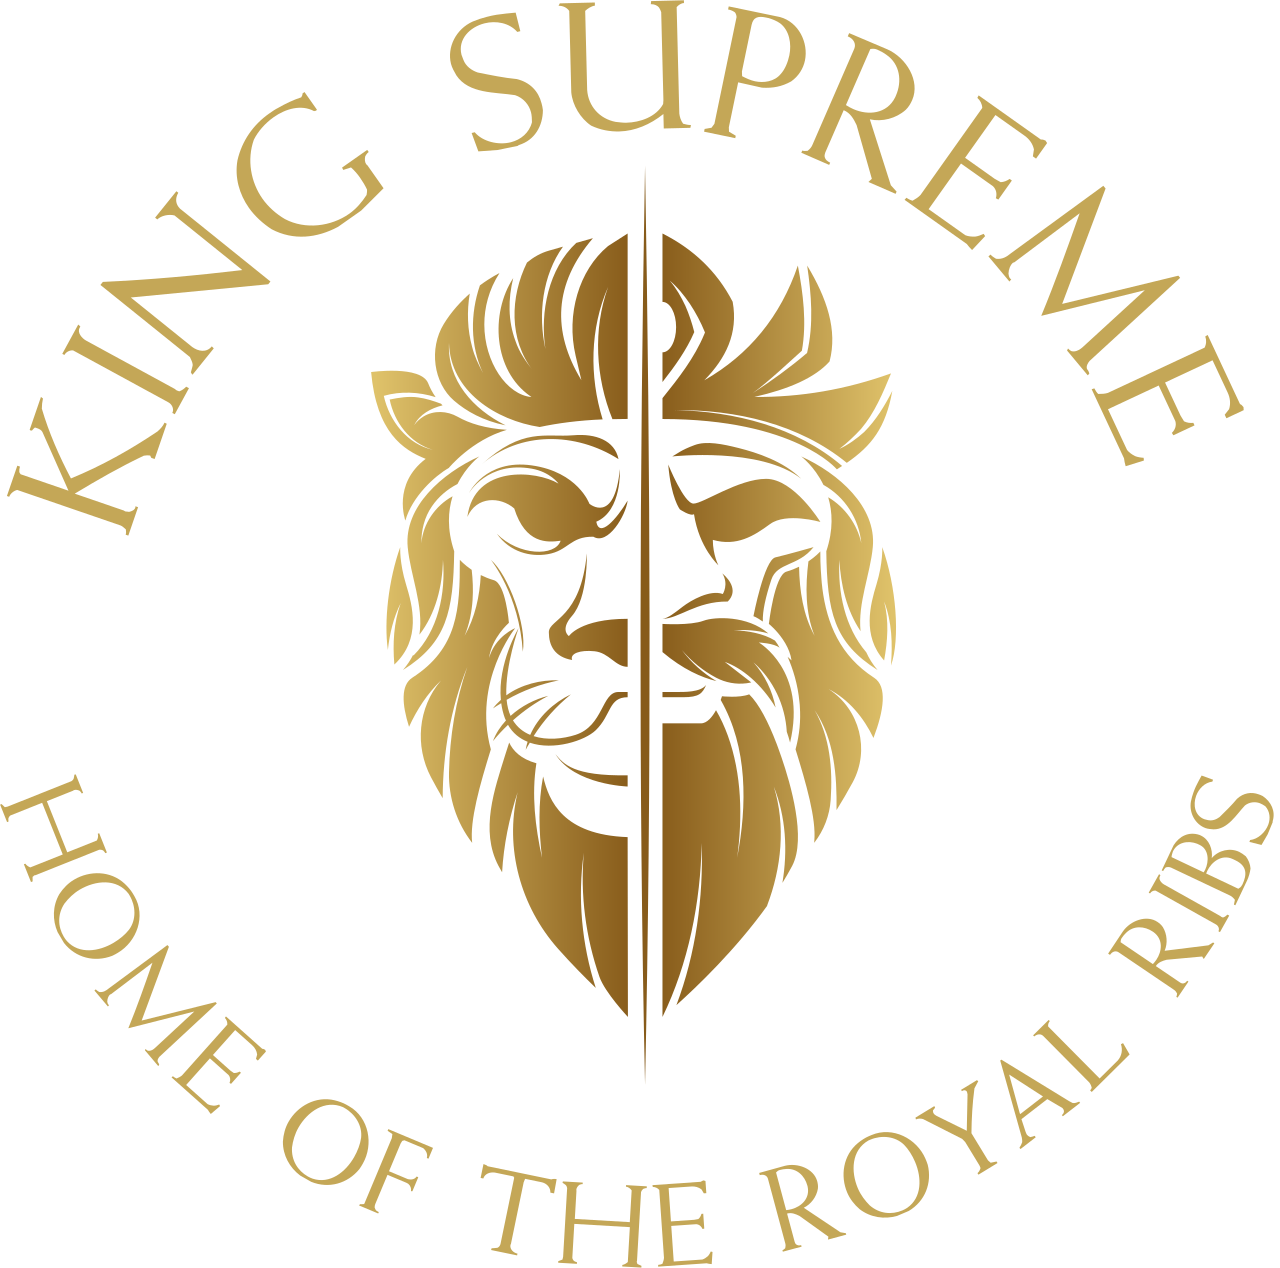 KING SUPREME 's web page